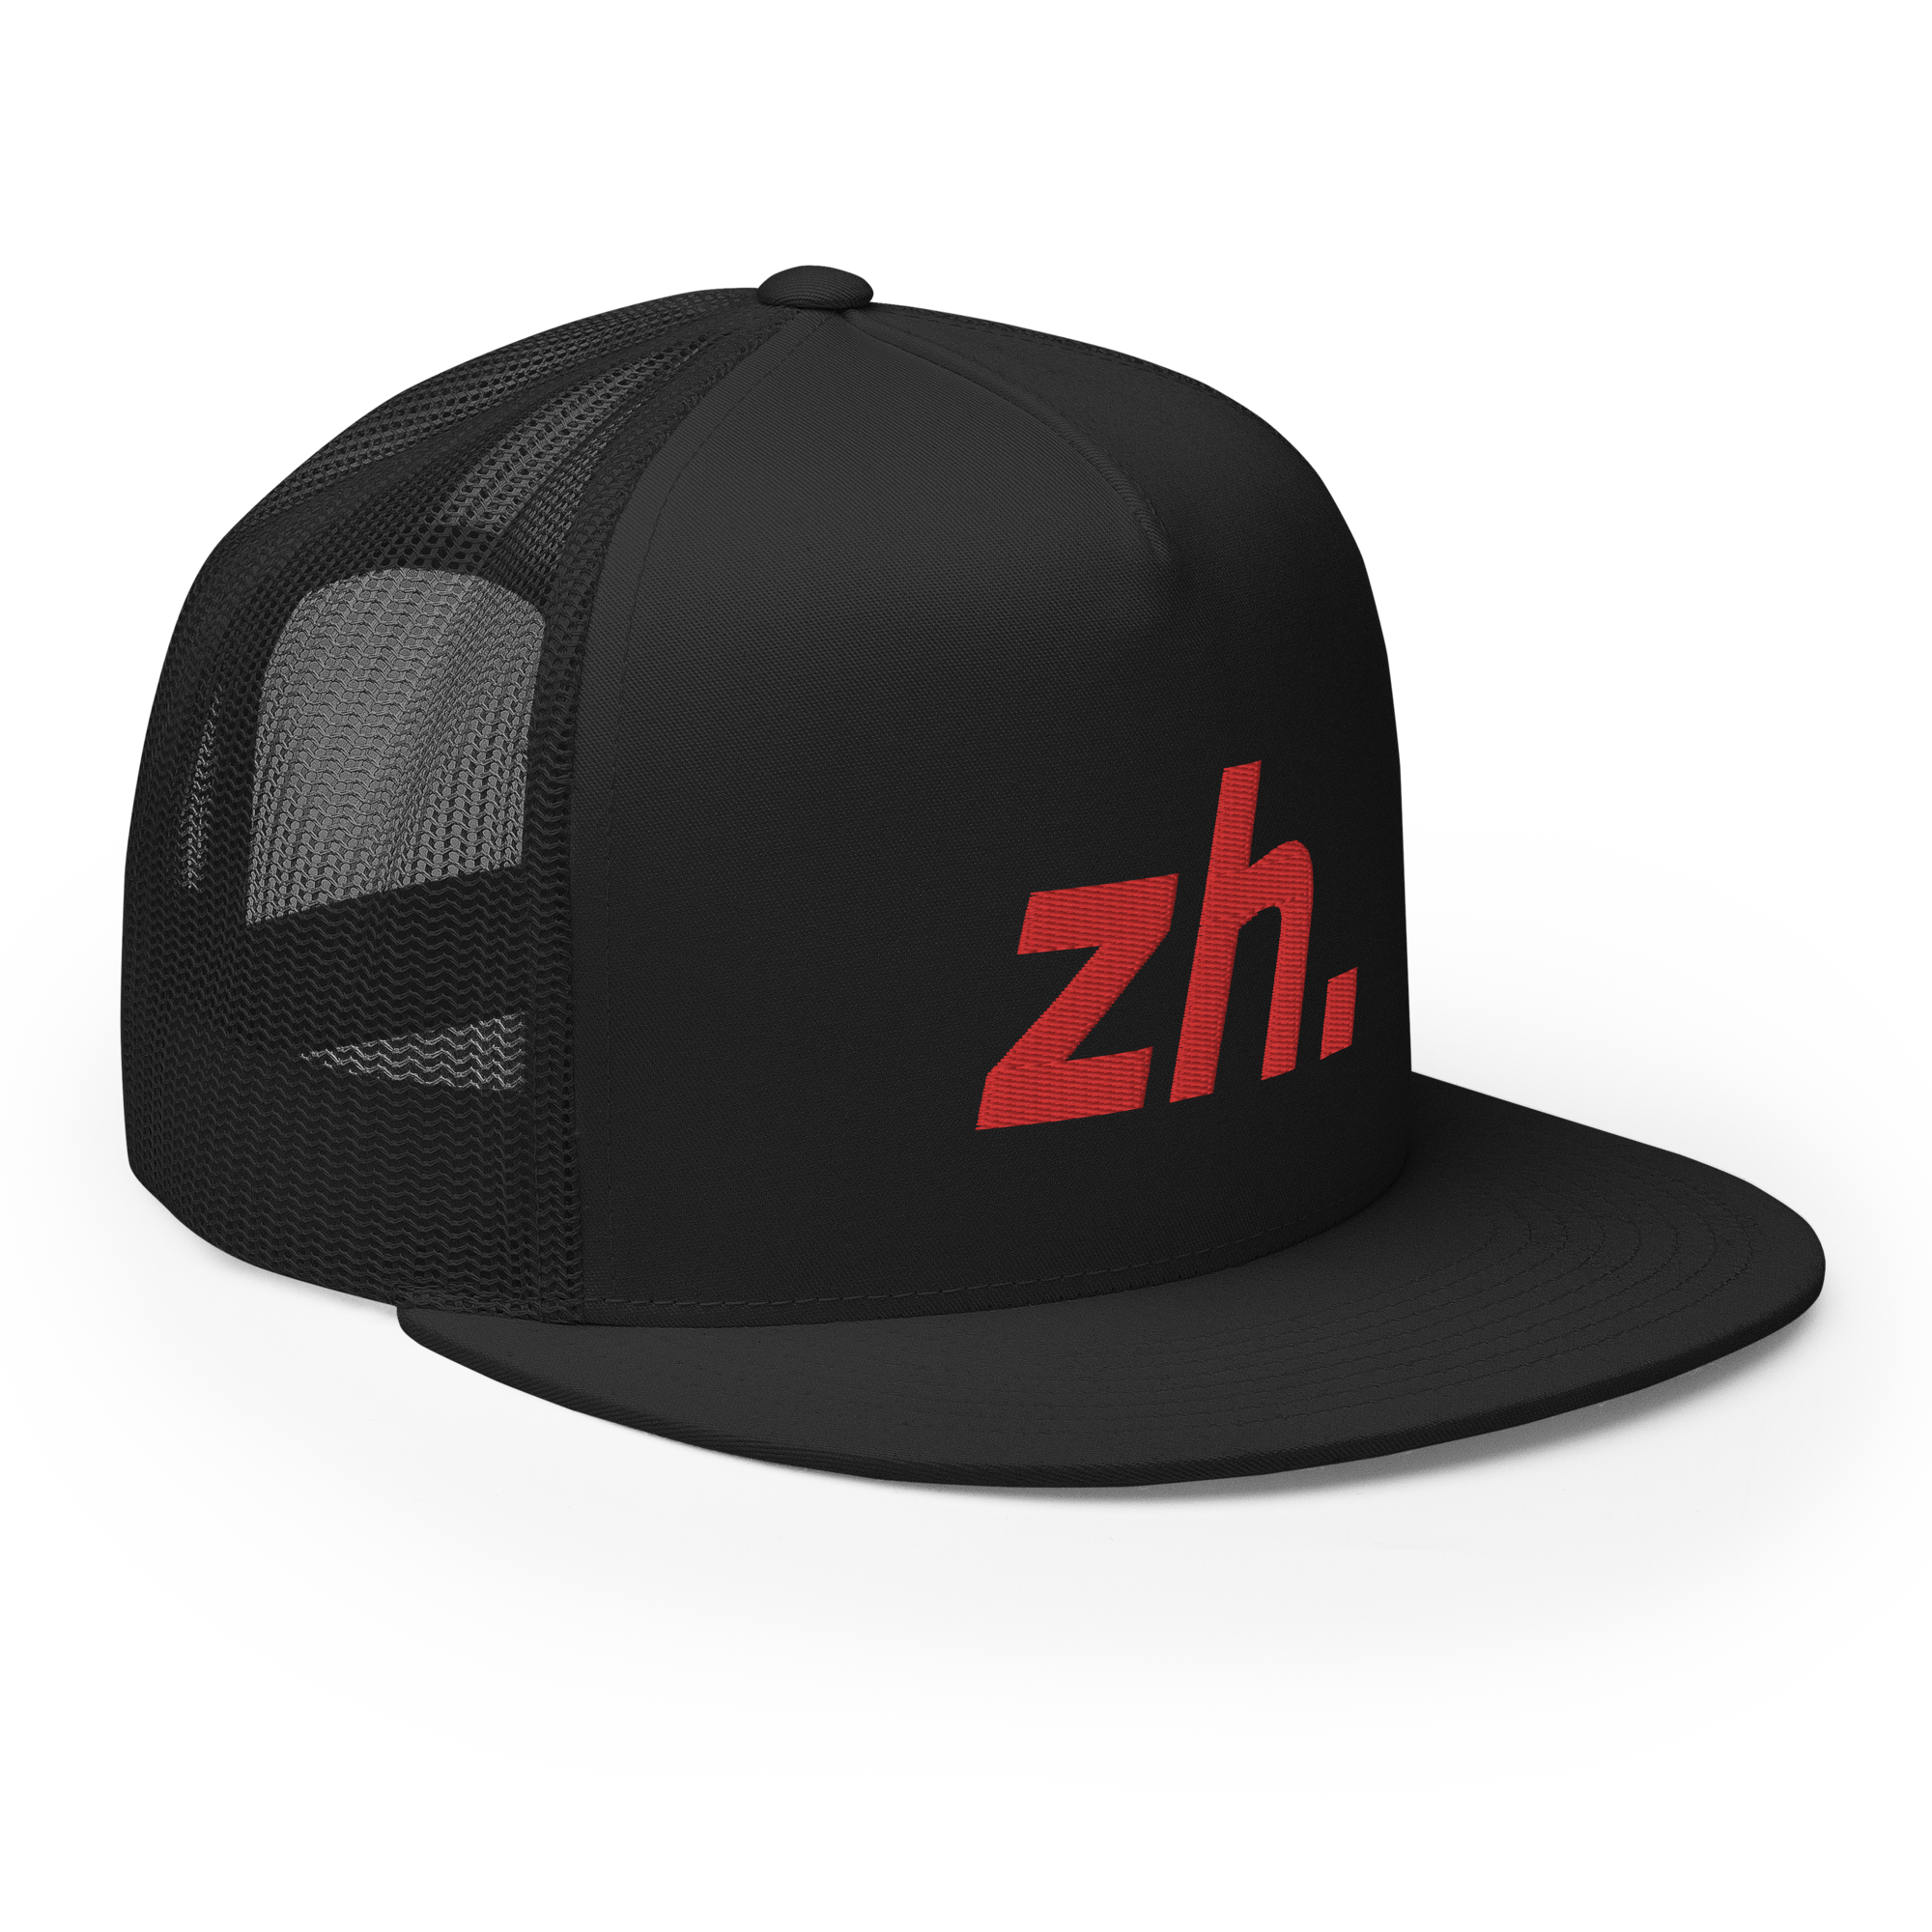 zh. hat